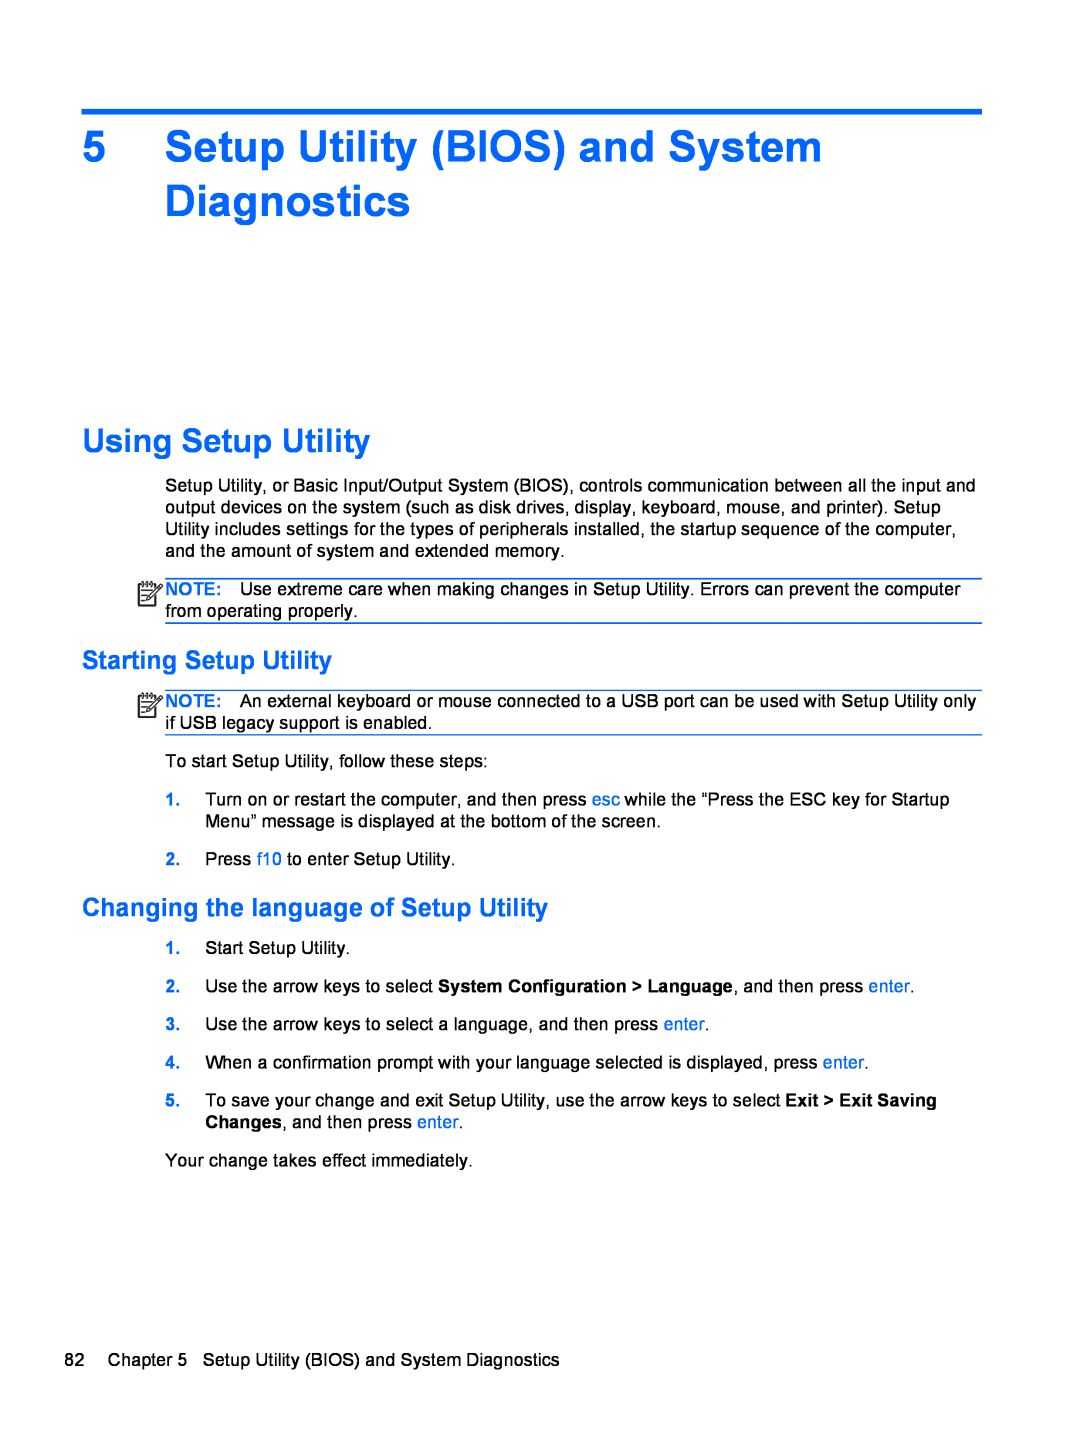 HP D1E80UA, 2000 manual Setup Utility BIOS and System Diagnostics, Using Setup Utility, Starting Setup Utility 